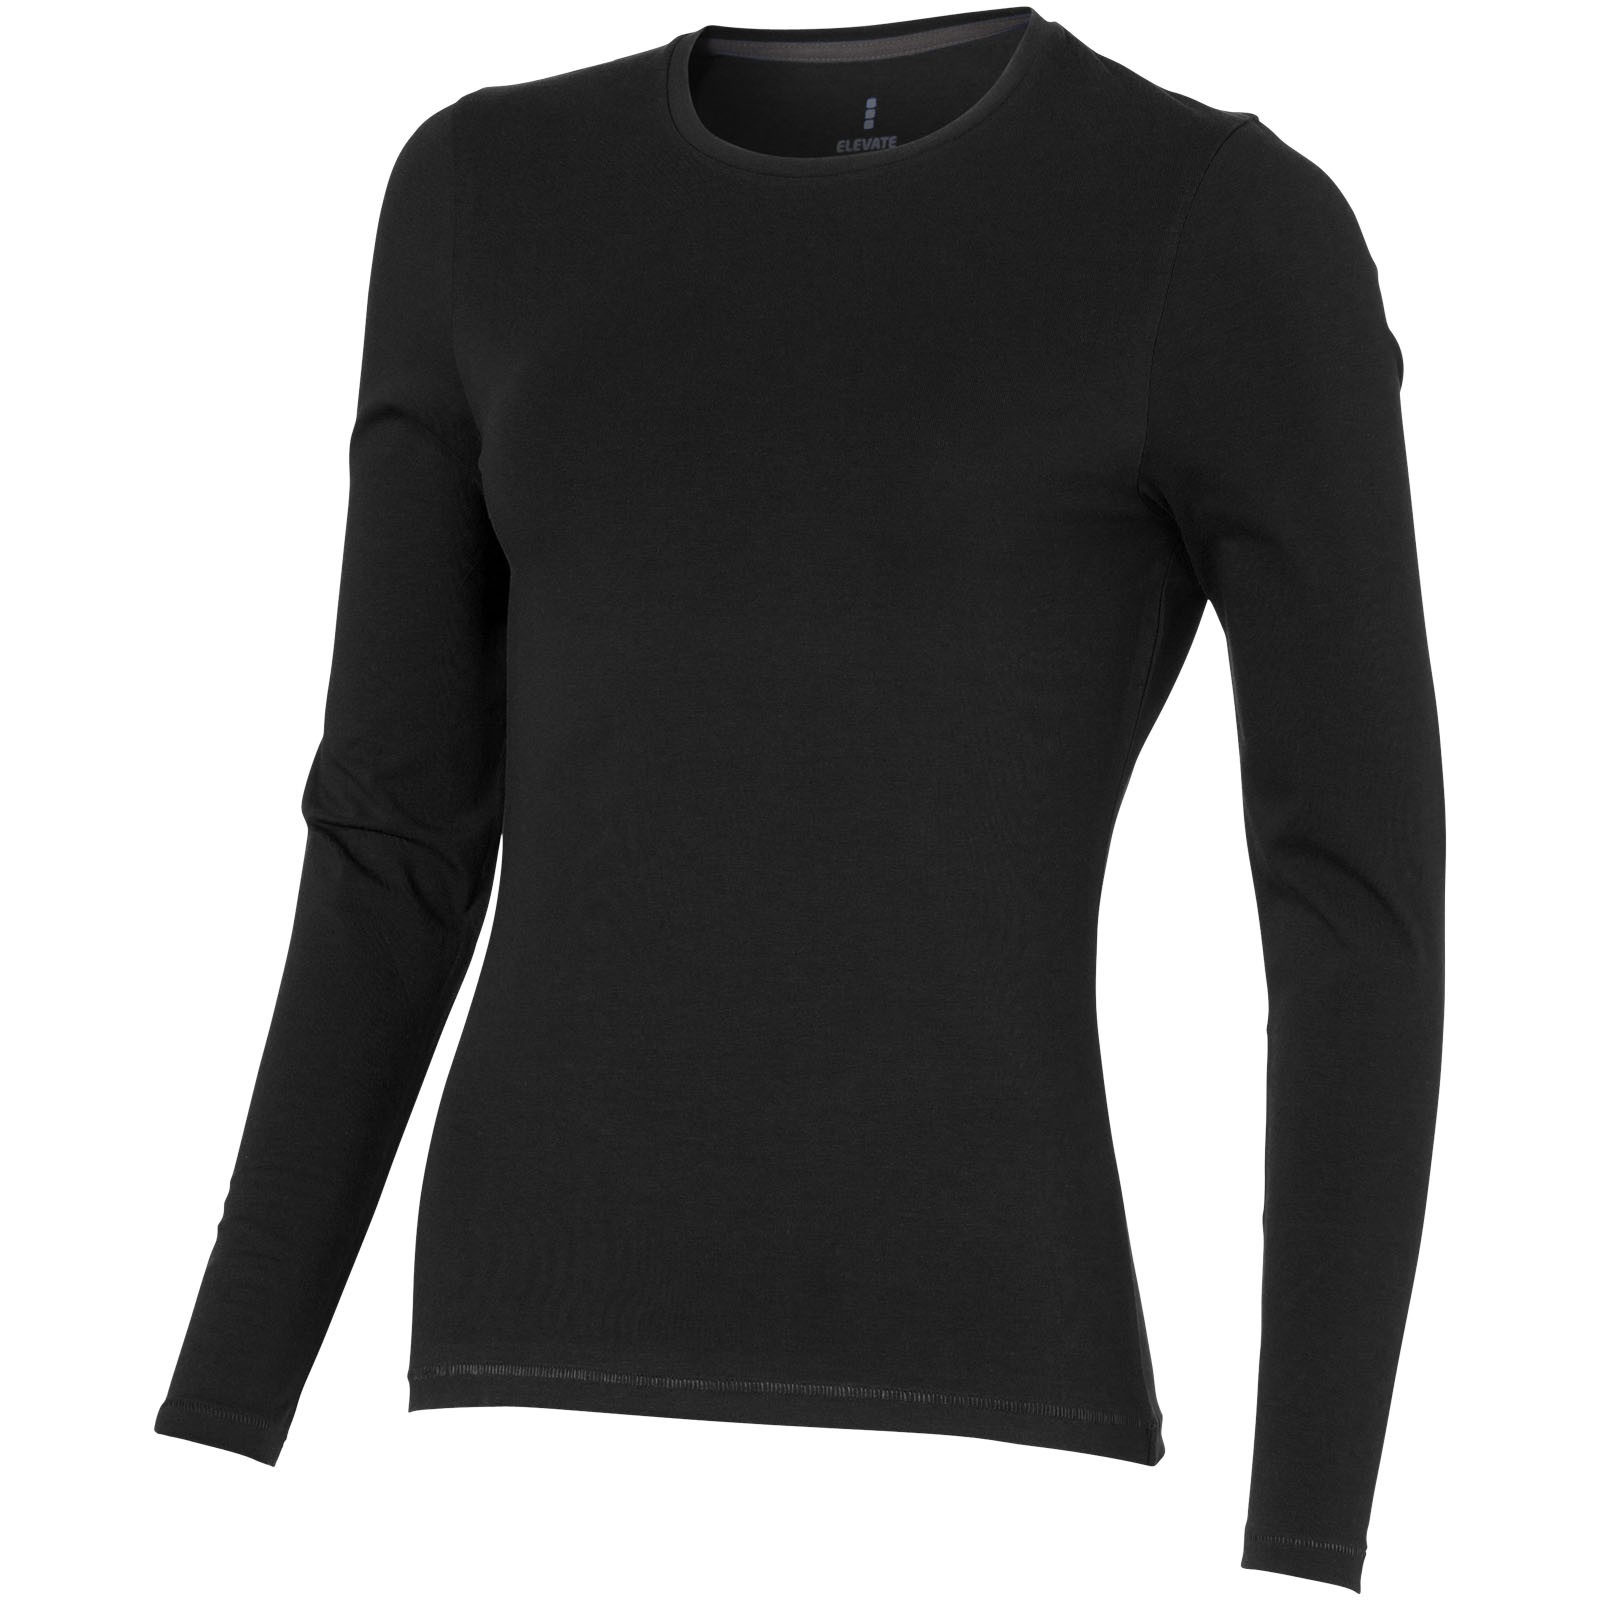 Ponoka long sleeve women's GOTS organic t-shirt - Solid Black / XS